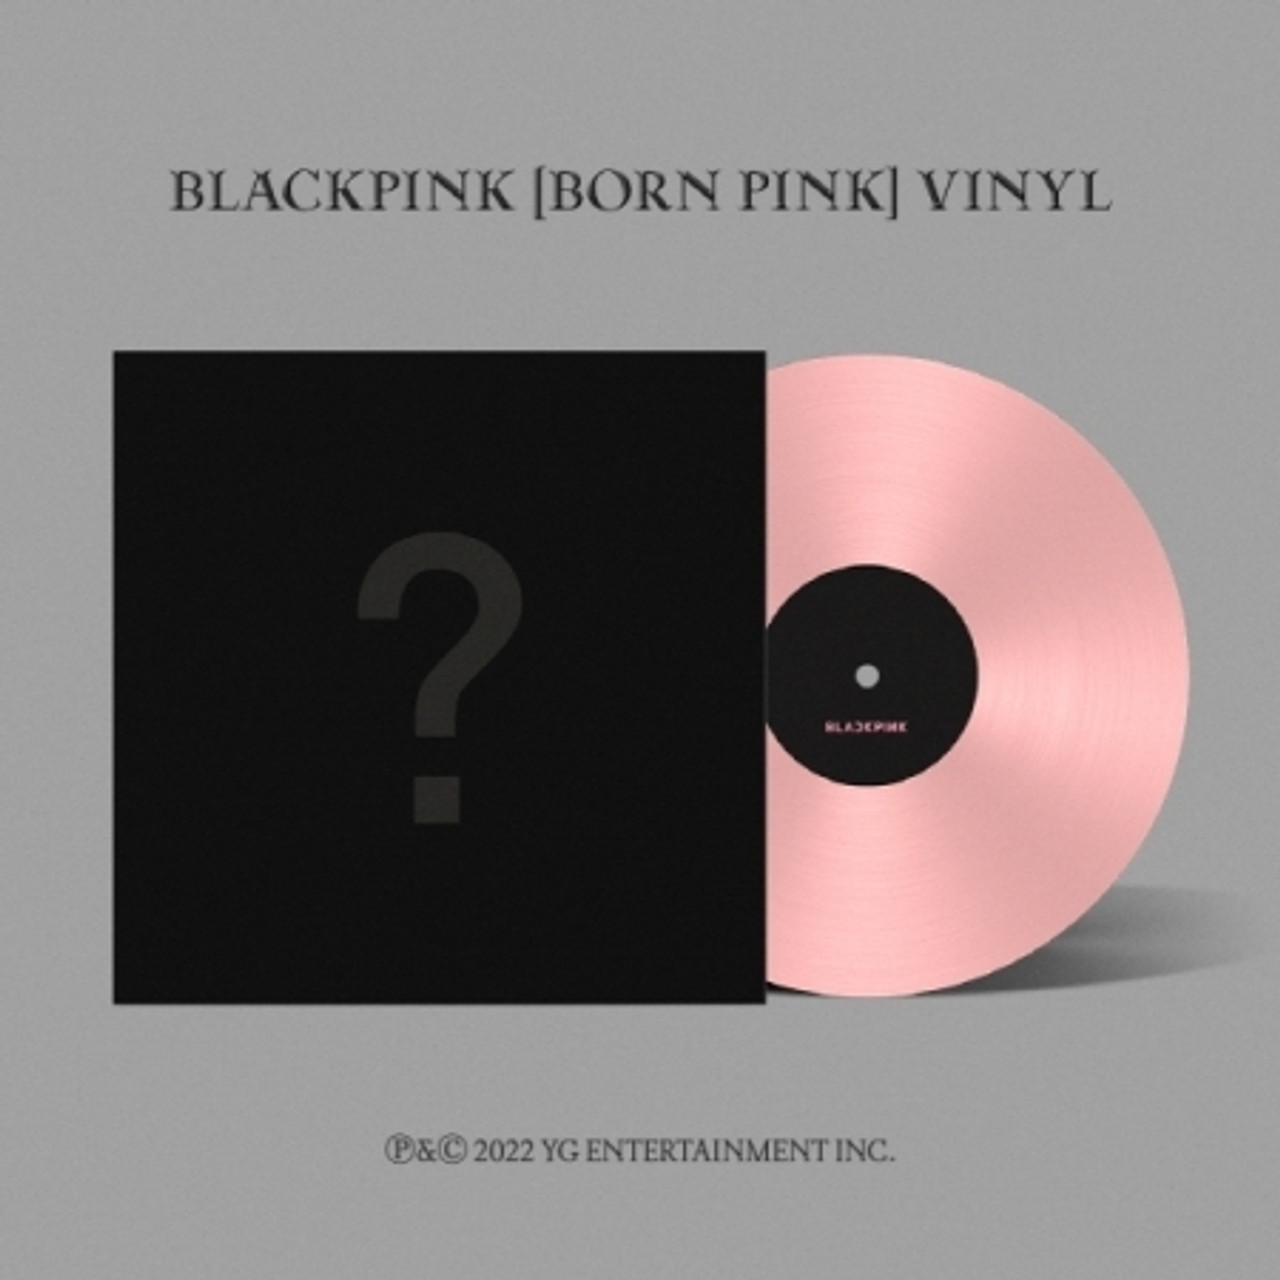 BLACKPINK - 2nd VINYL LP [BORN PINK] -LIMITED EDITION+Potocard